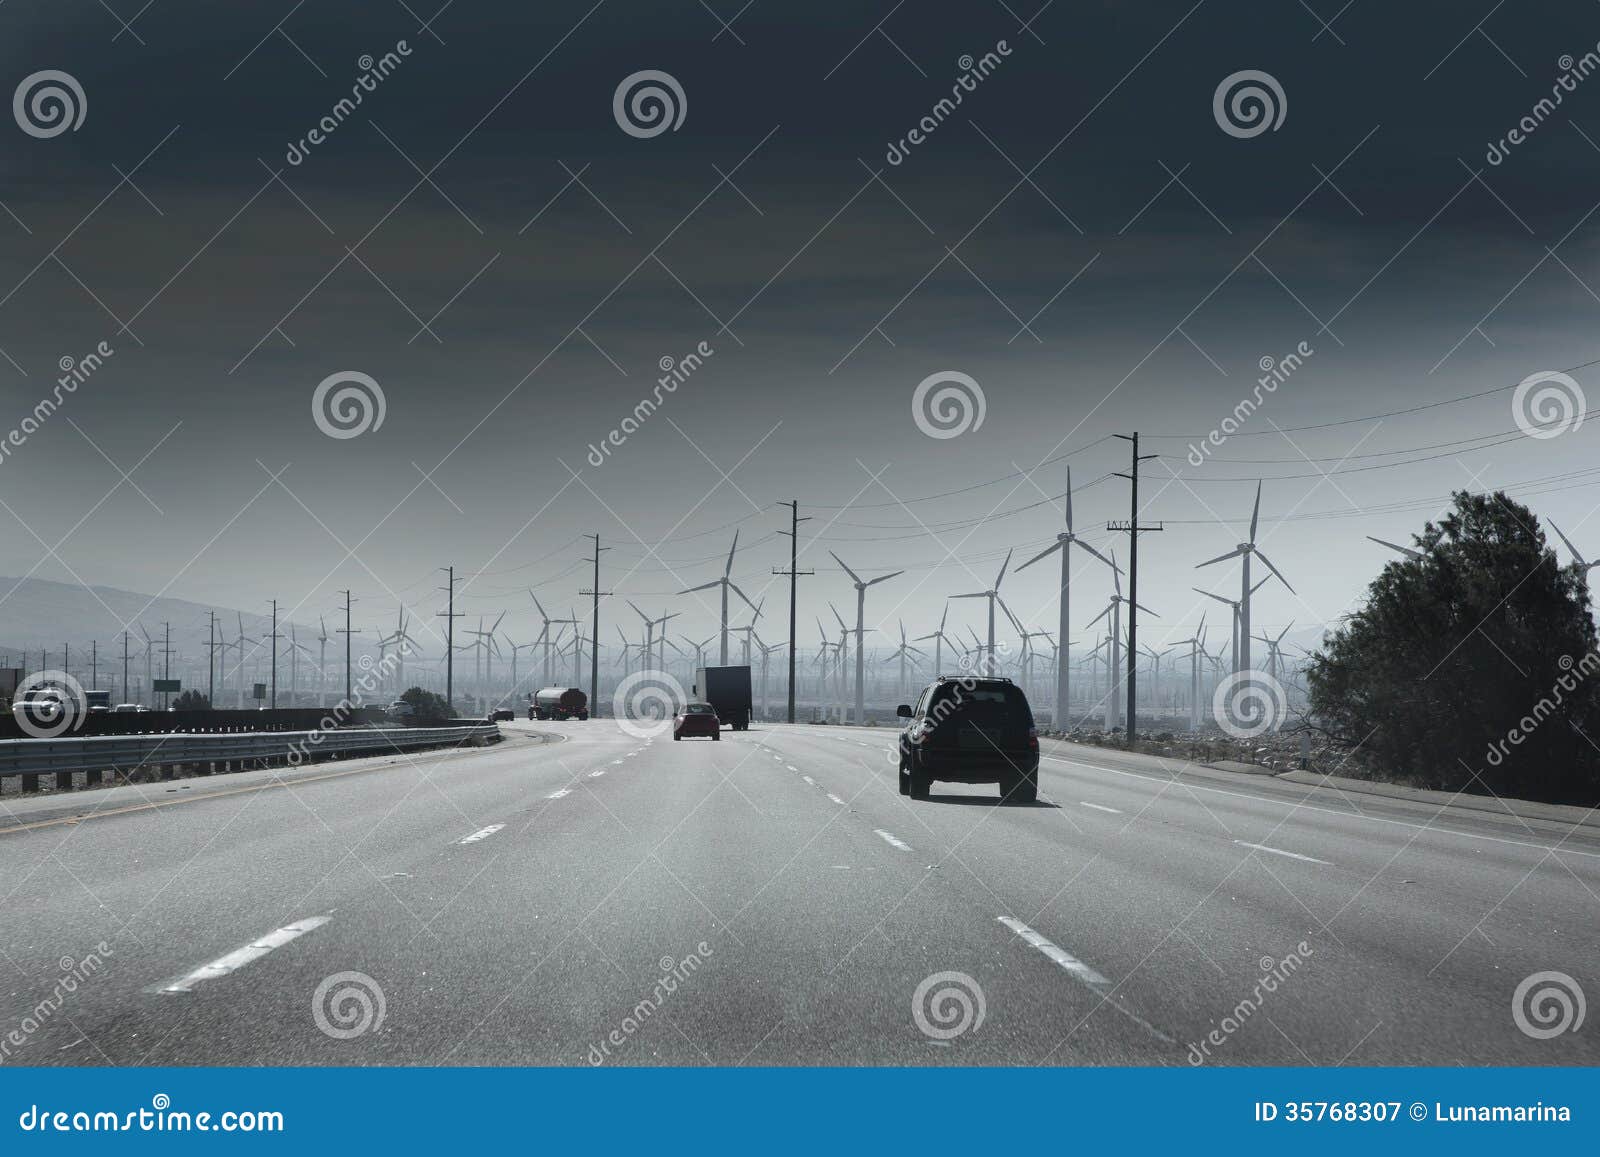 california road with electric windmills aerogenerators